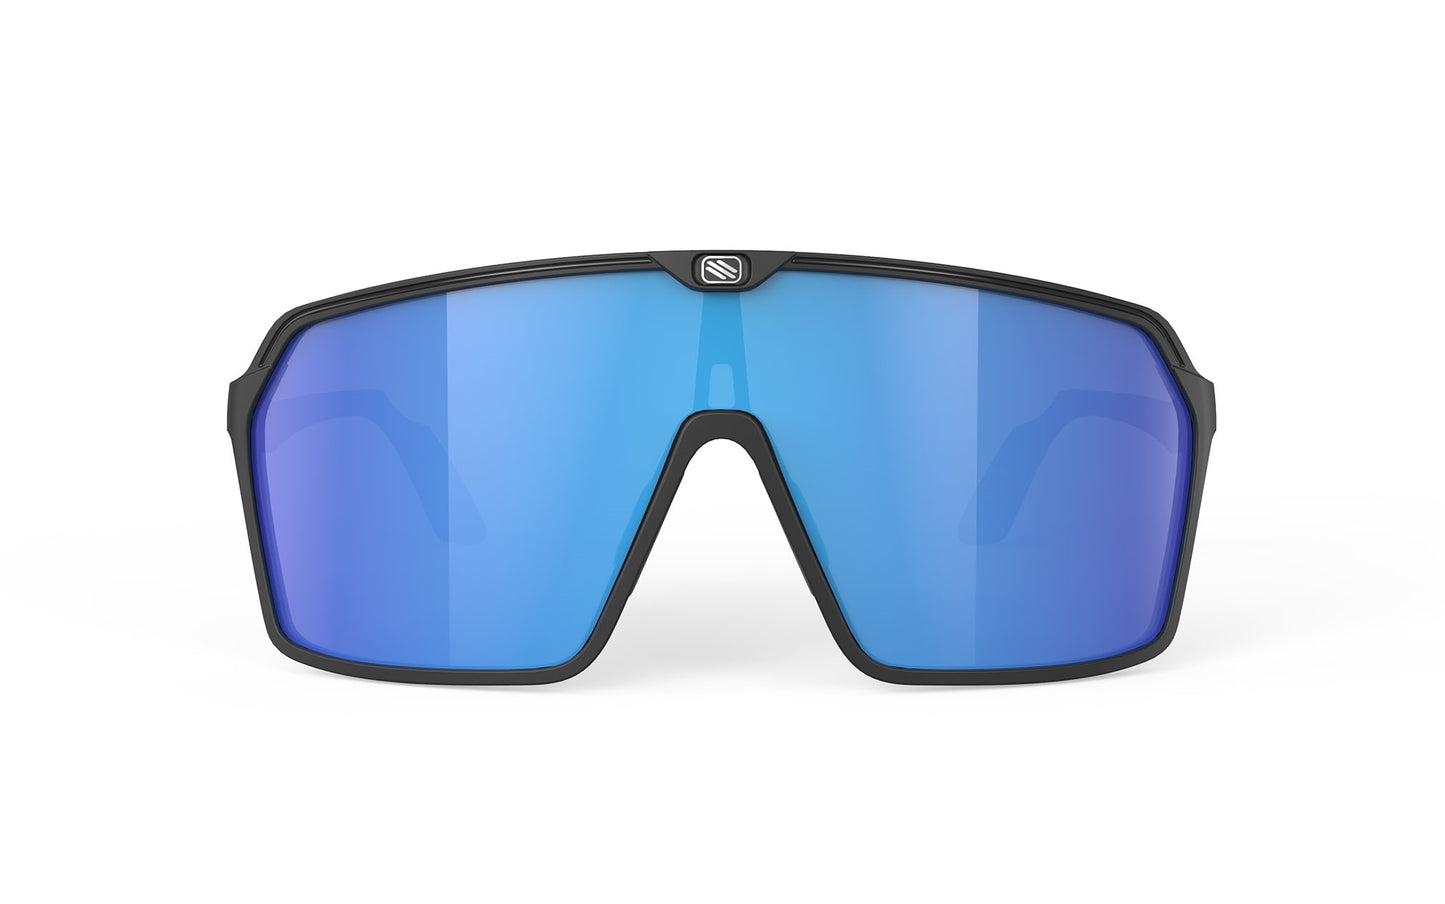 Rudy Project Performance Eyewear Spinshield Black (Matte) - Multilaser Blue